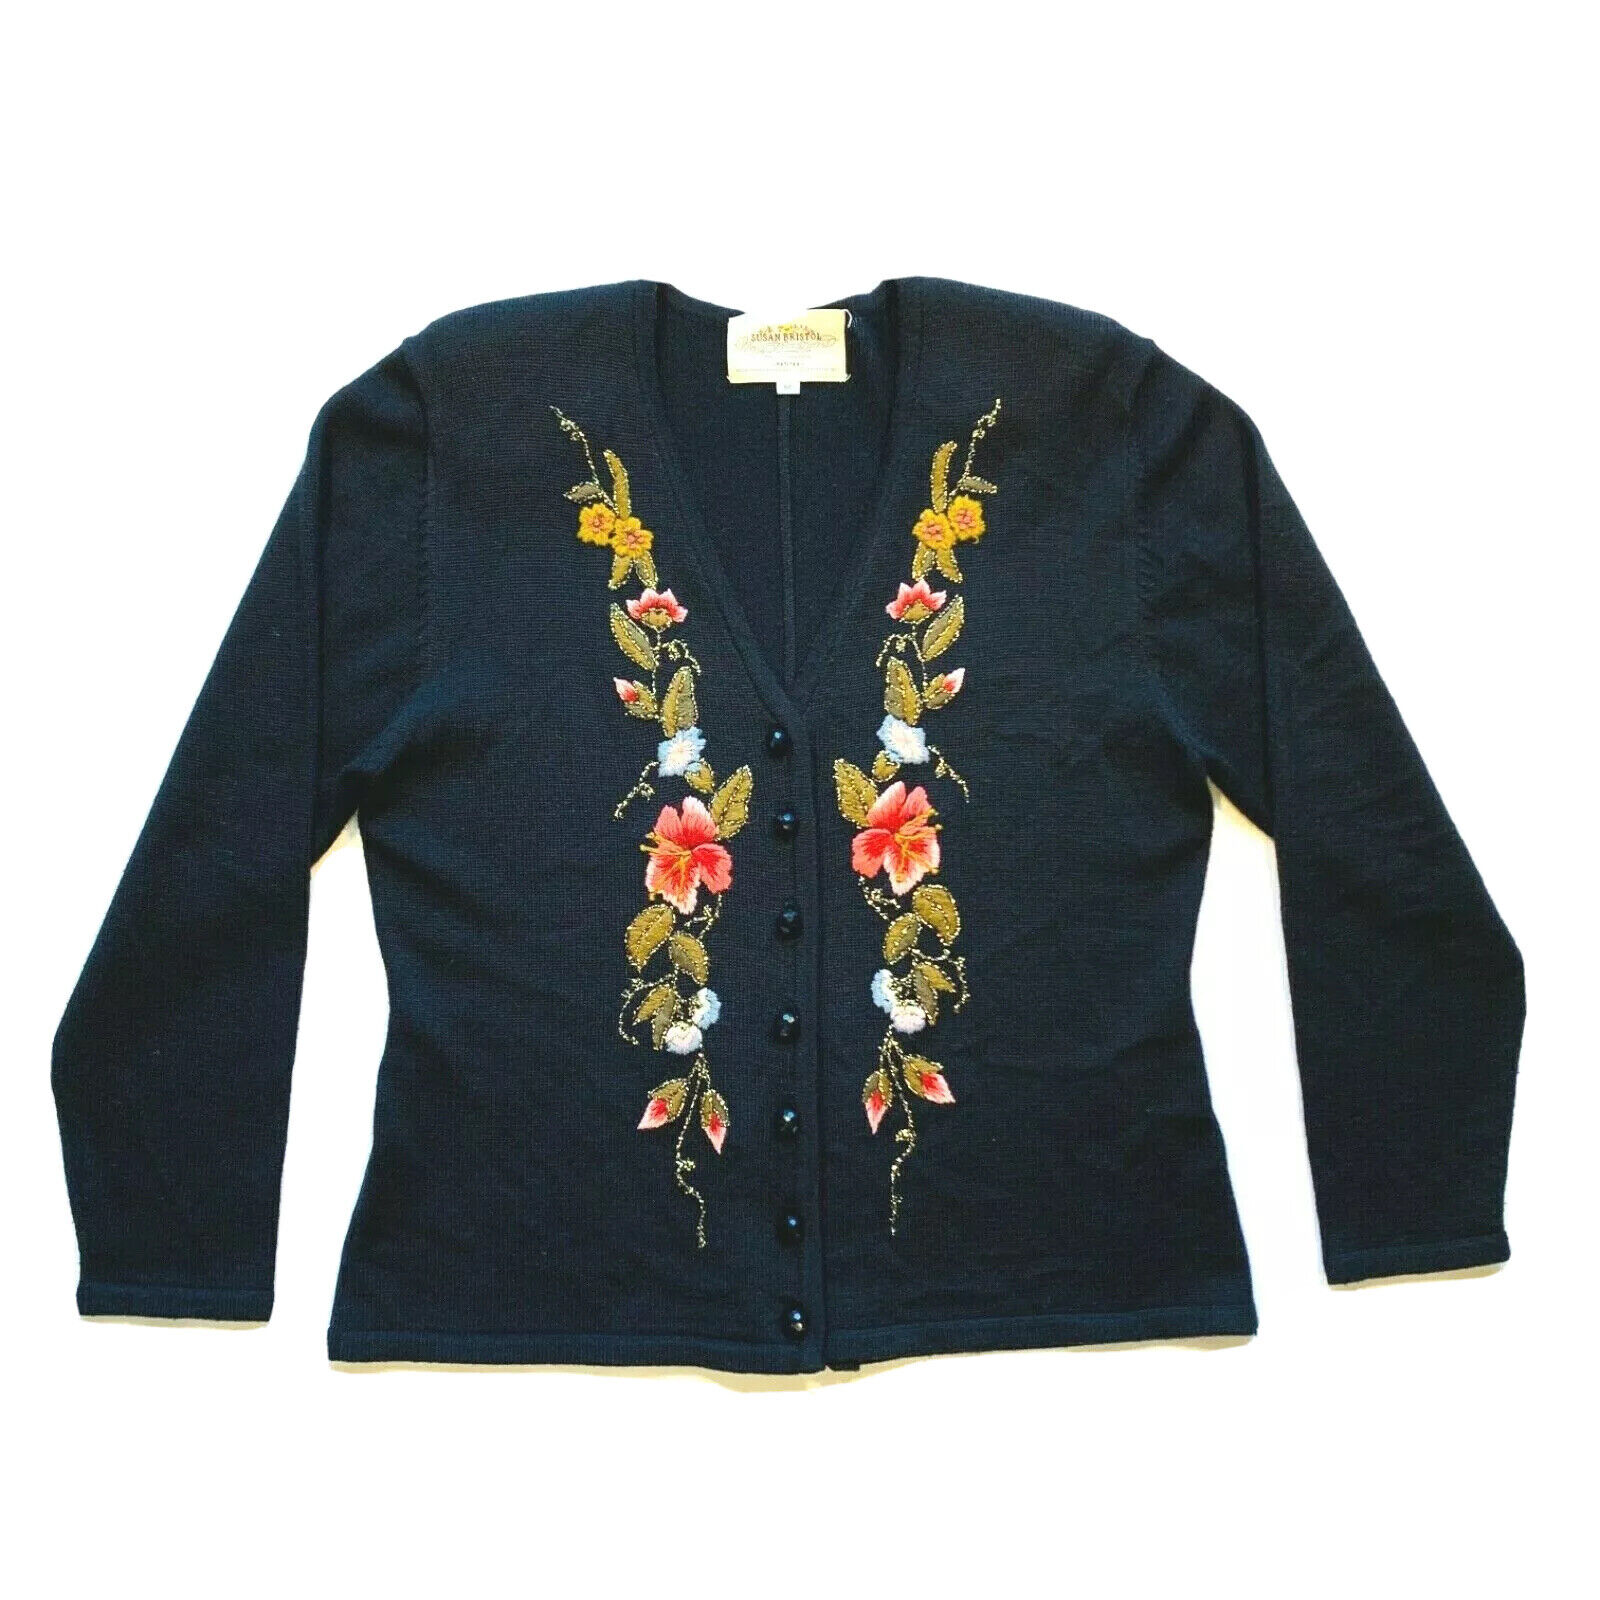 Susan Bristol 1995 Hand Embroidered Floral Cardigan Sweater Wool Blend Sparkle M